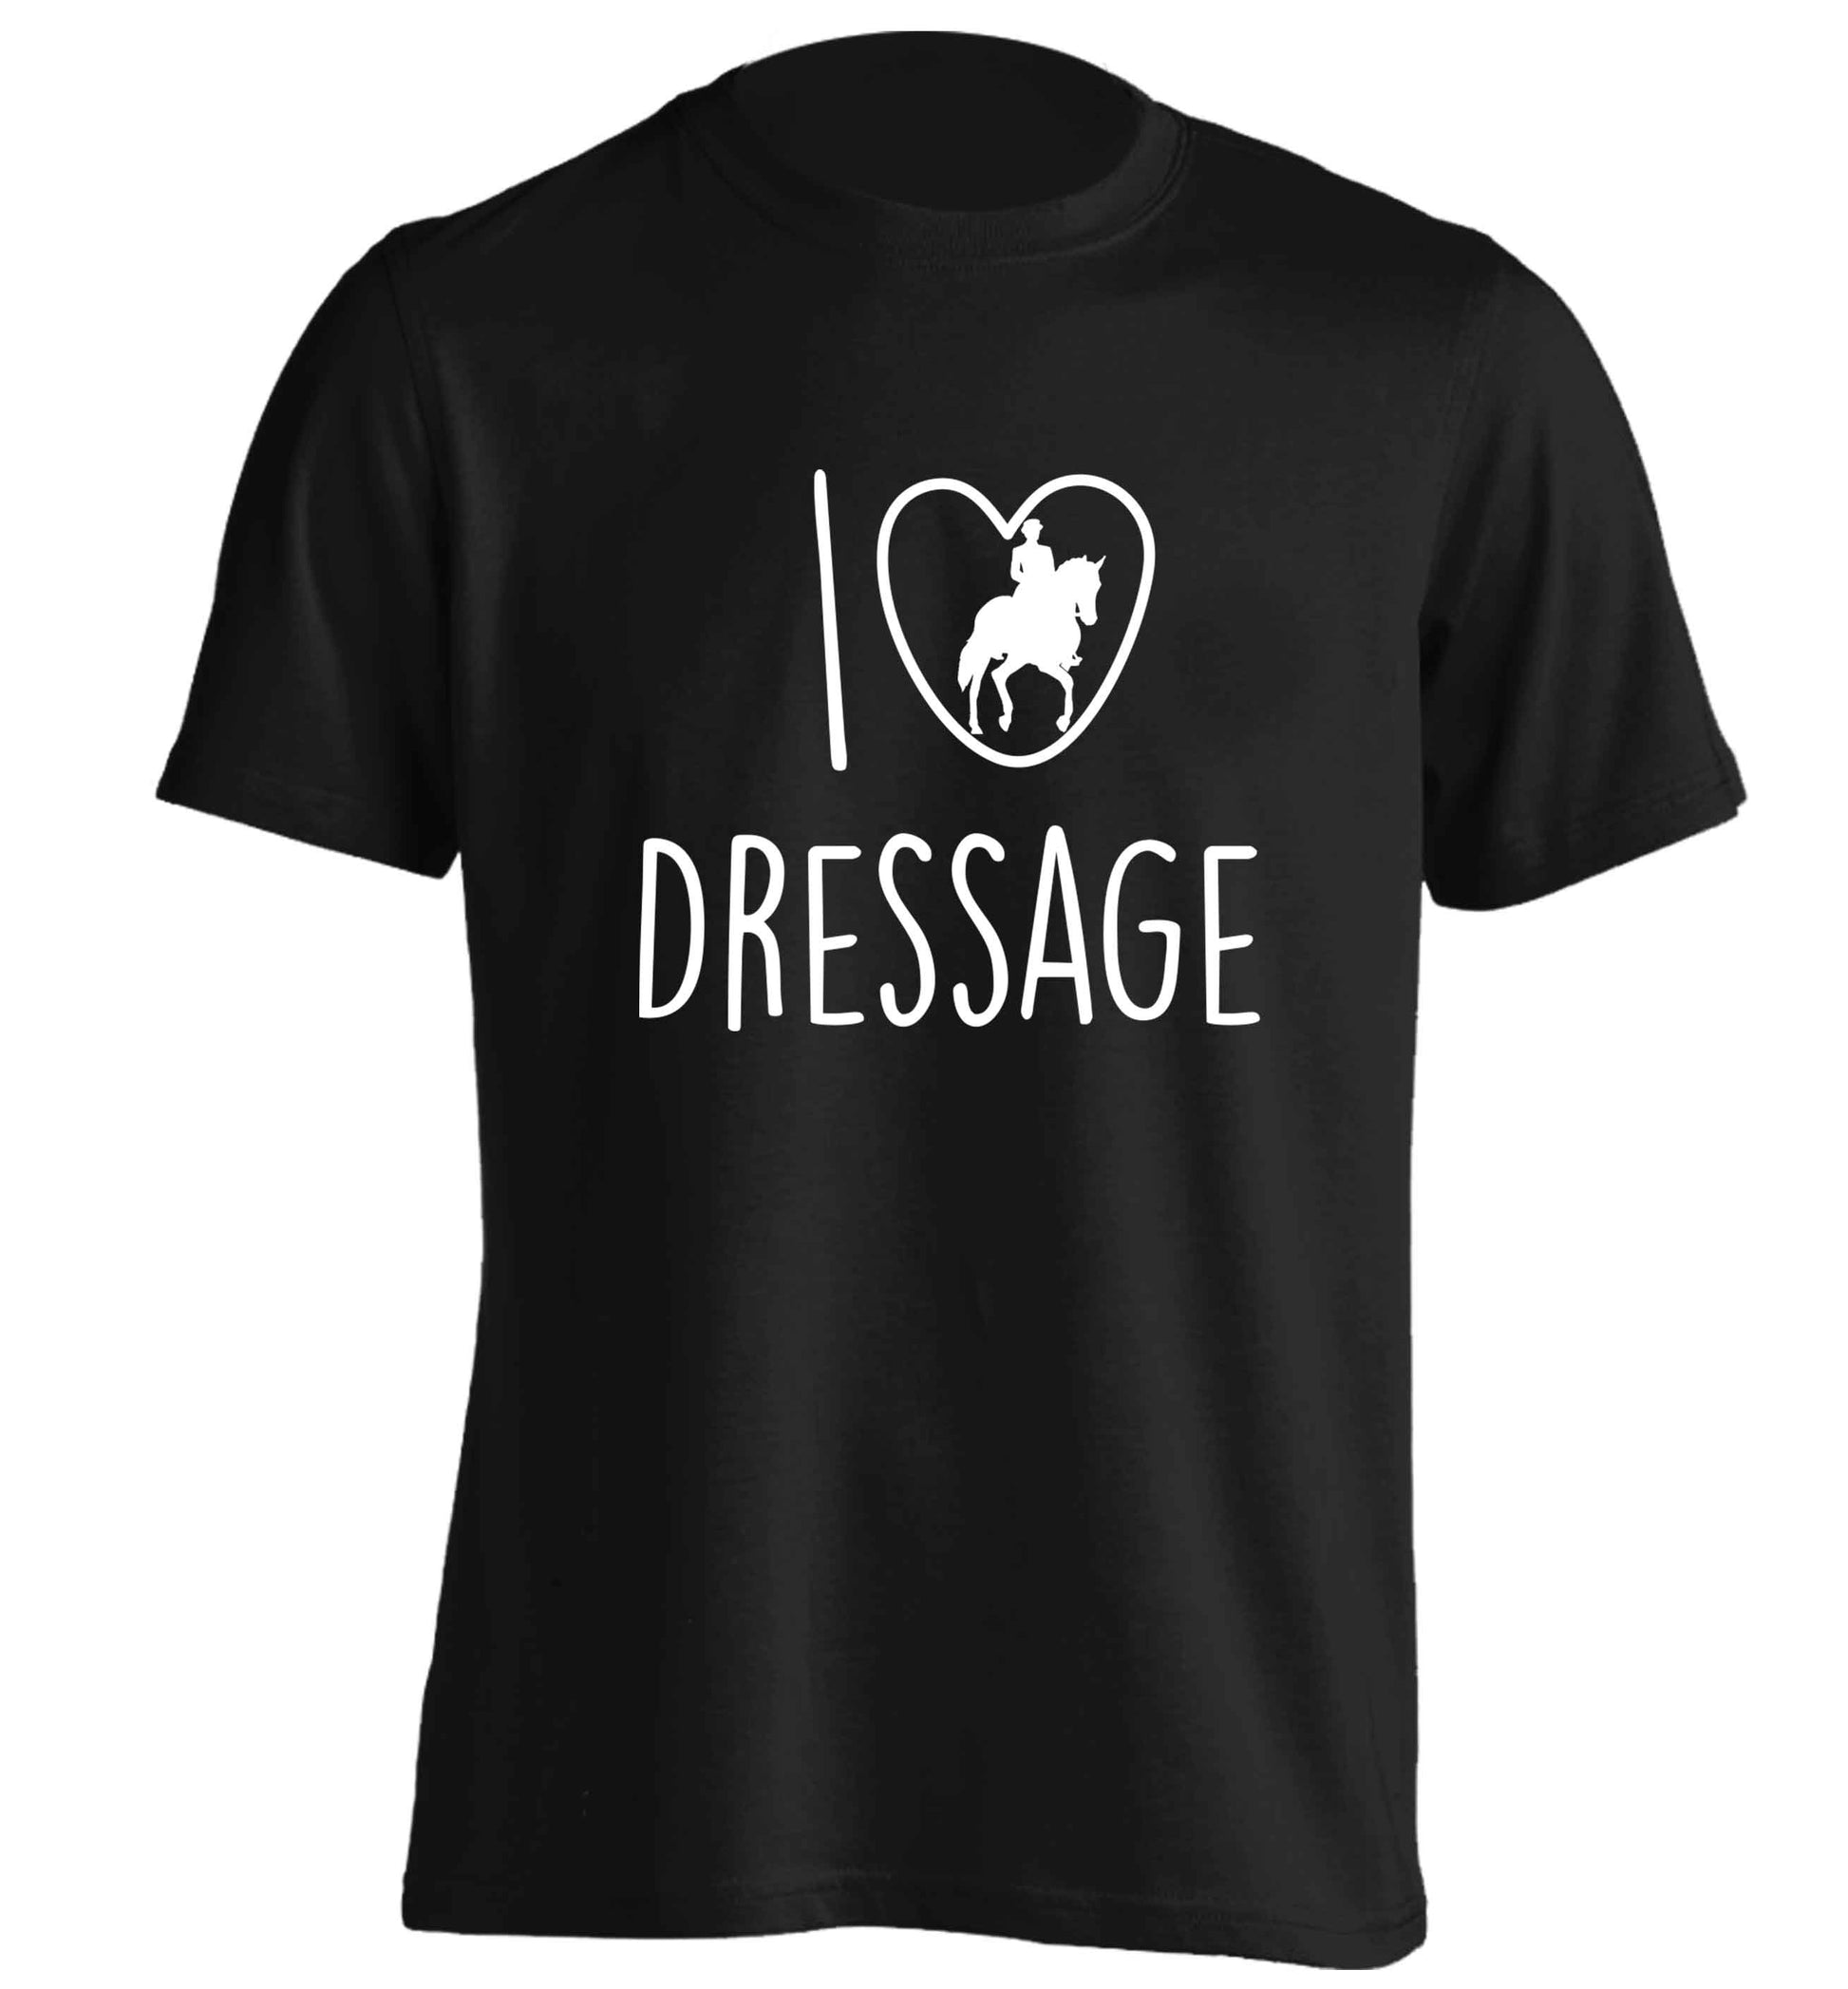 I love dressage adults unisex black Tshirt 2XL